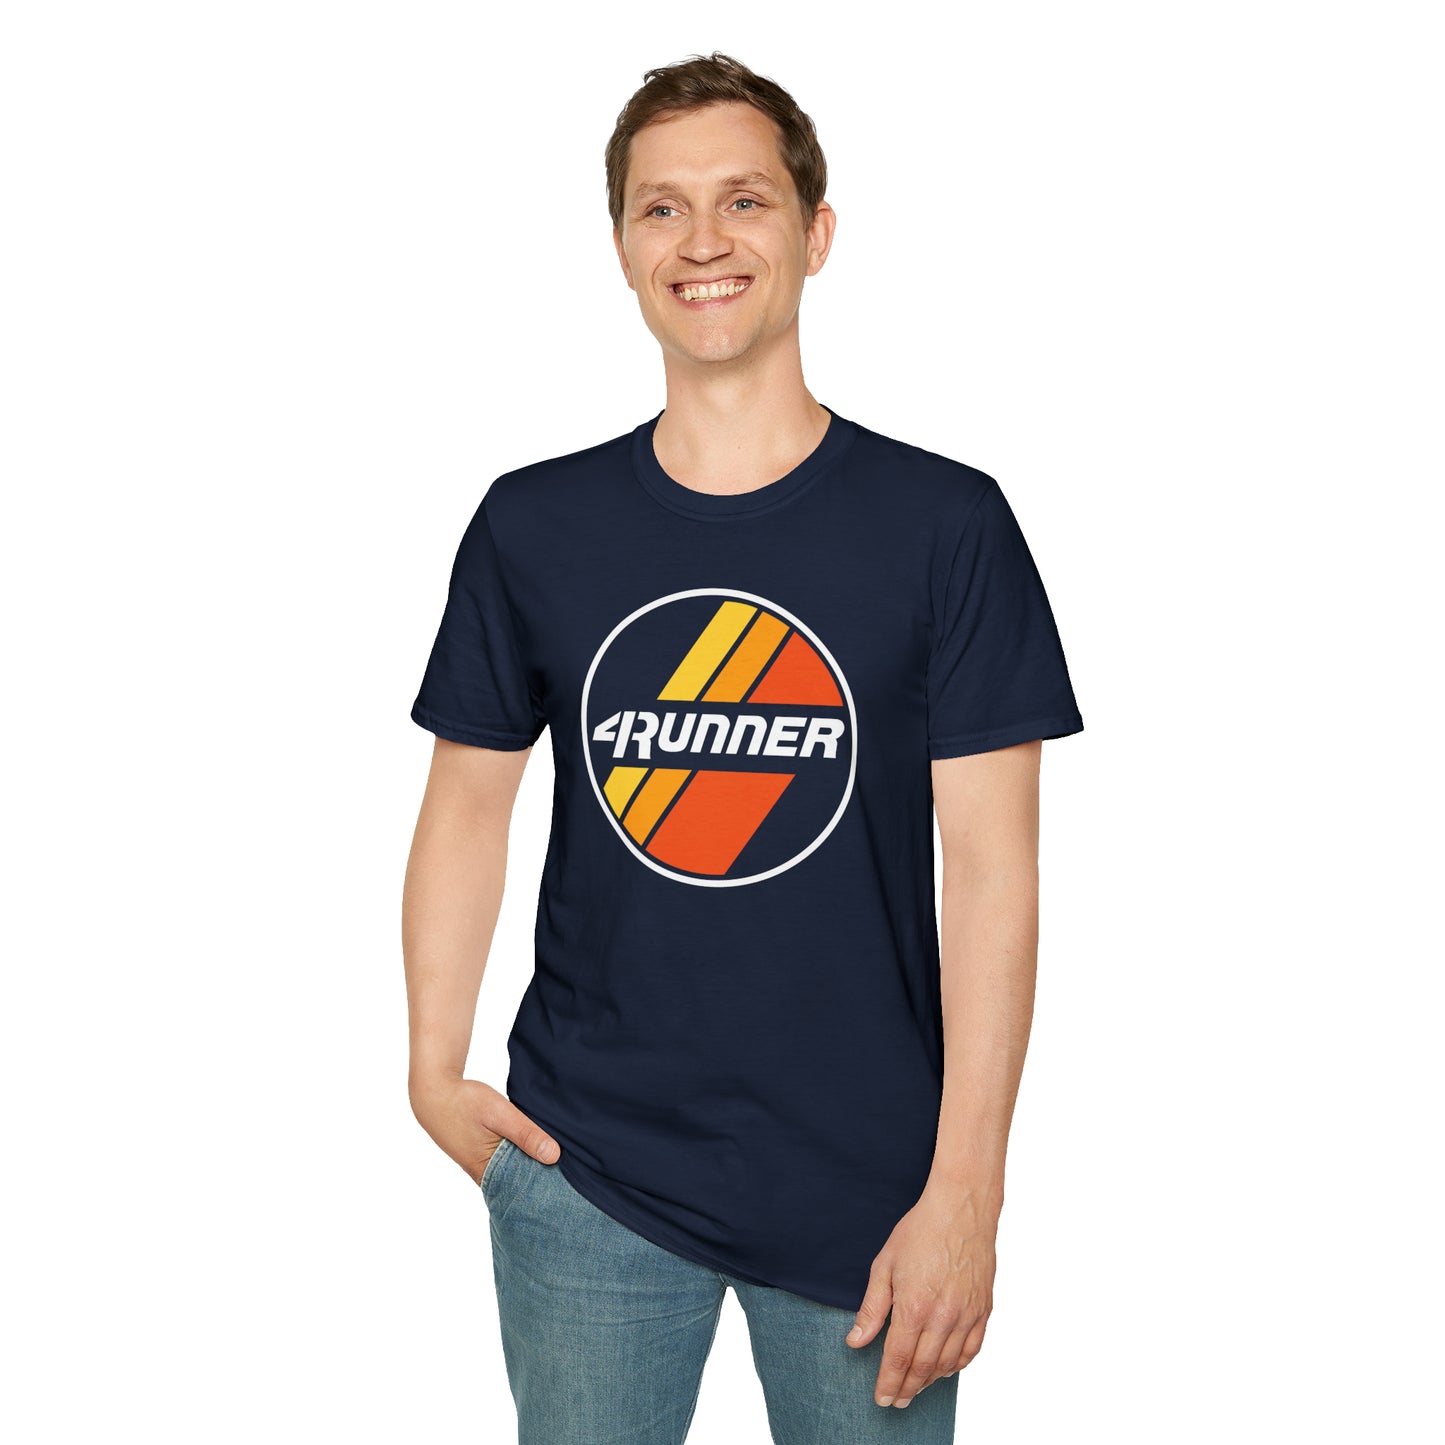 4Runner Retro Stripes Unisex Softstyle T-Shirt